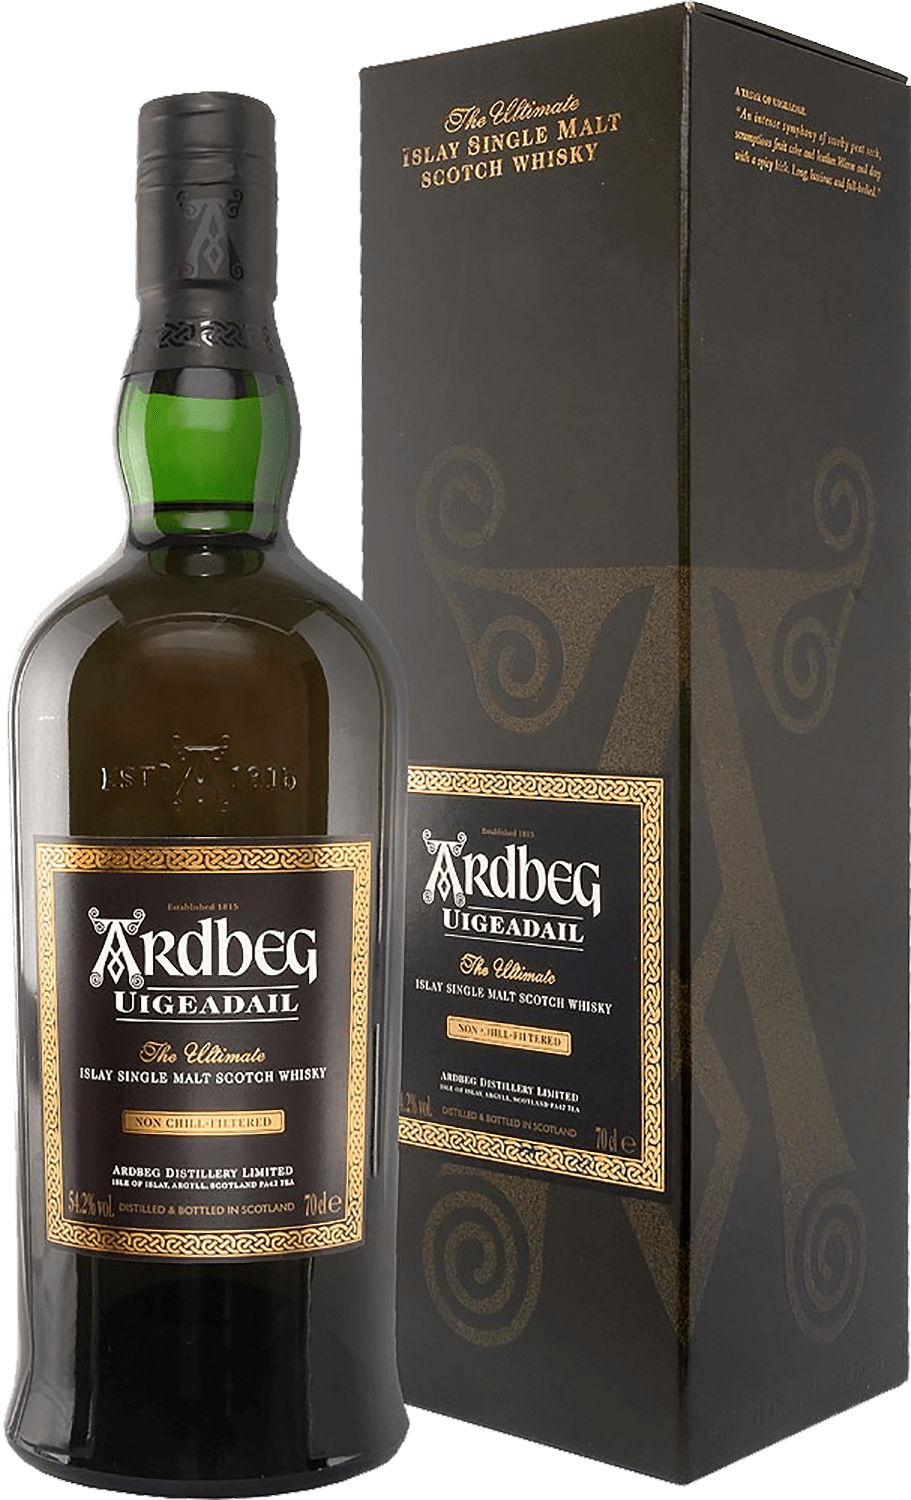 Ardbeg Uigeadail Single Malt Scotch Whisky ardbeg corryvreckan single malt scotch whisky gift box